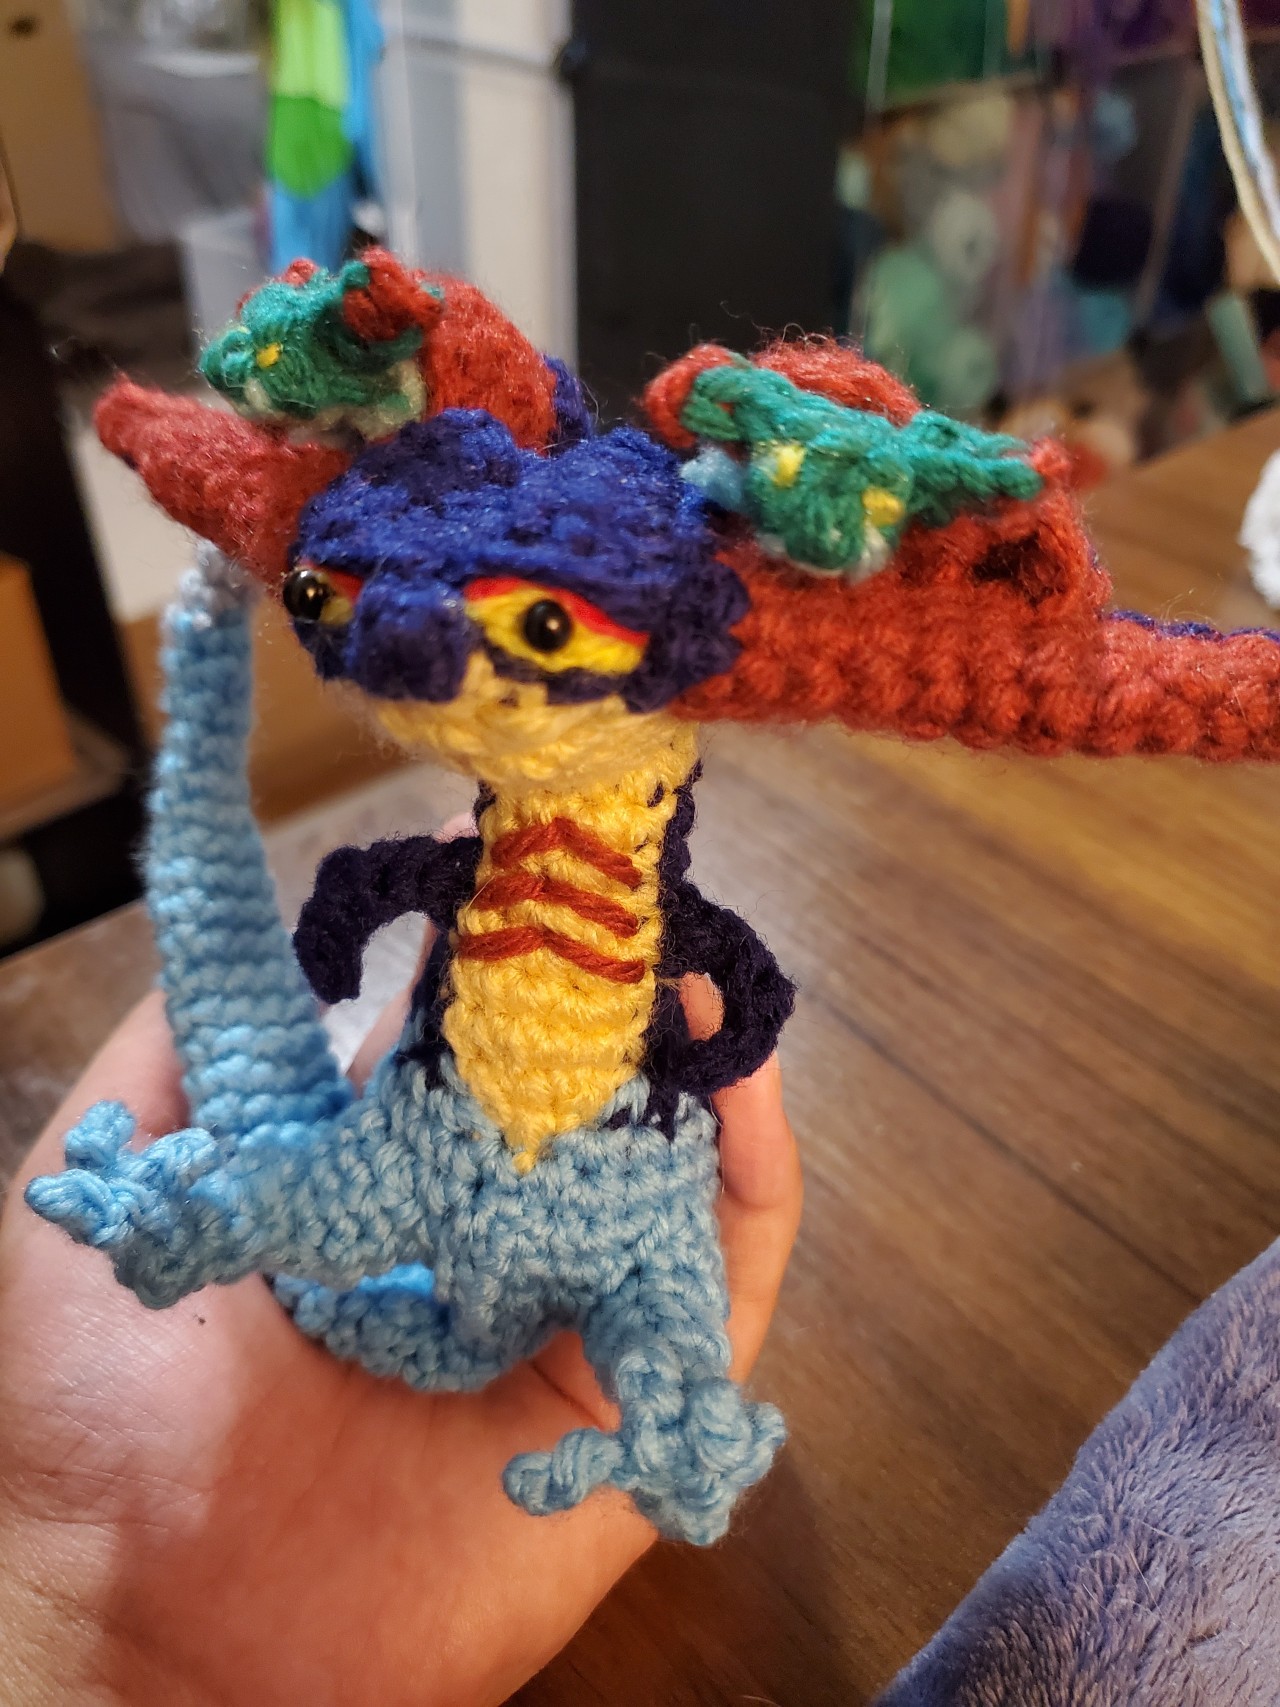 Cuddly Handmade Monsters : crochet pokemon